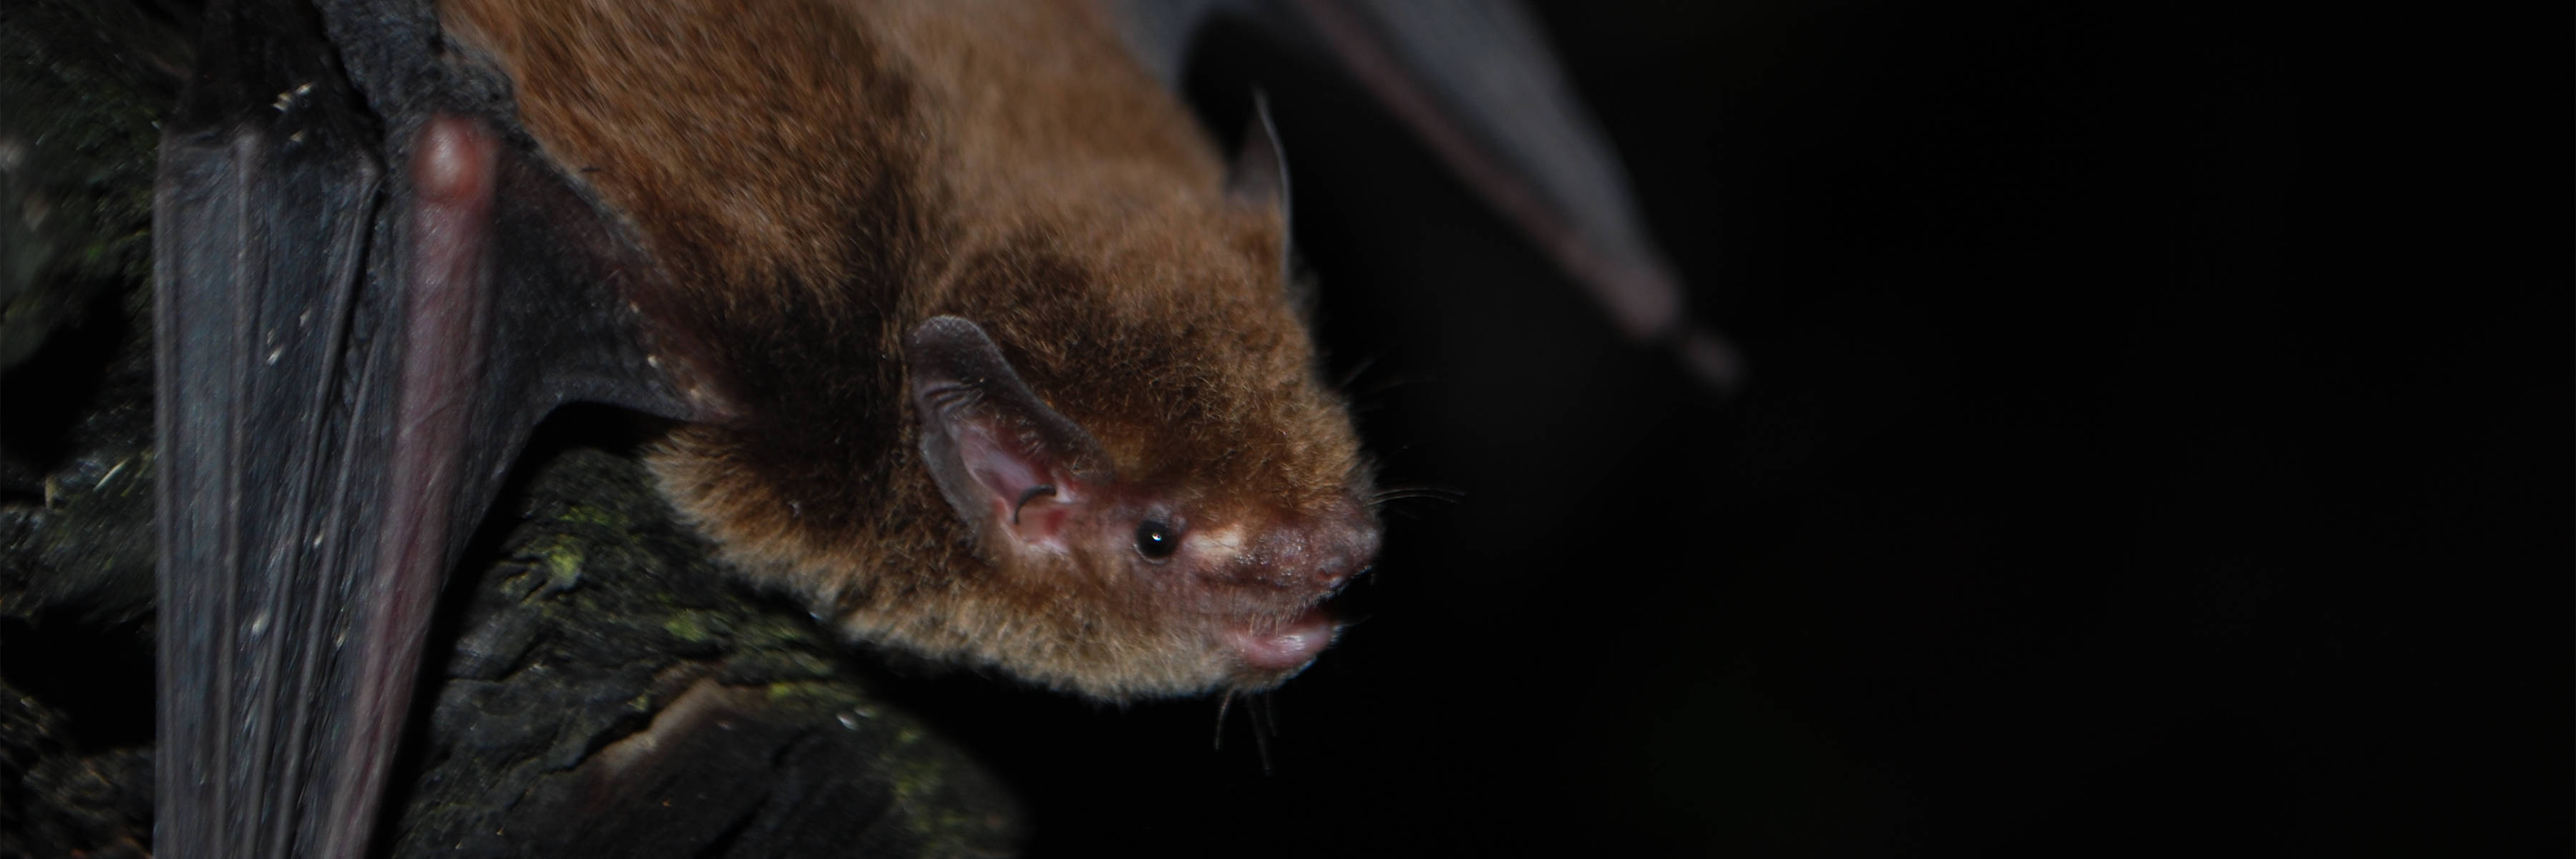 Southern forest bat. Image: Lisa Cawthen.